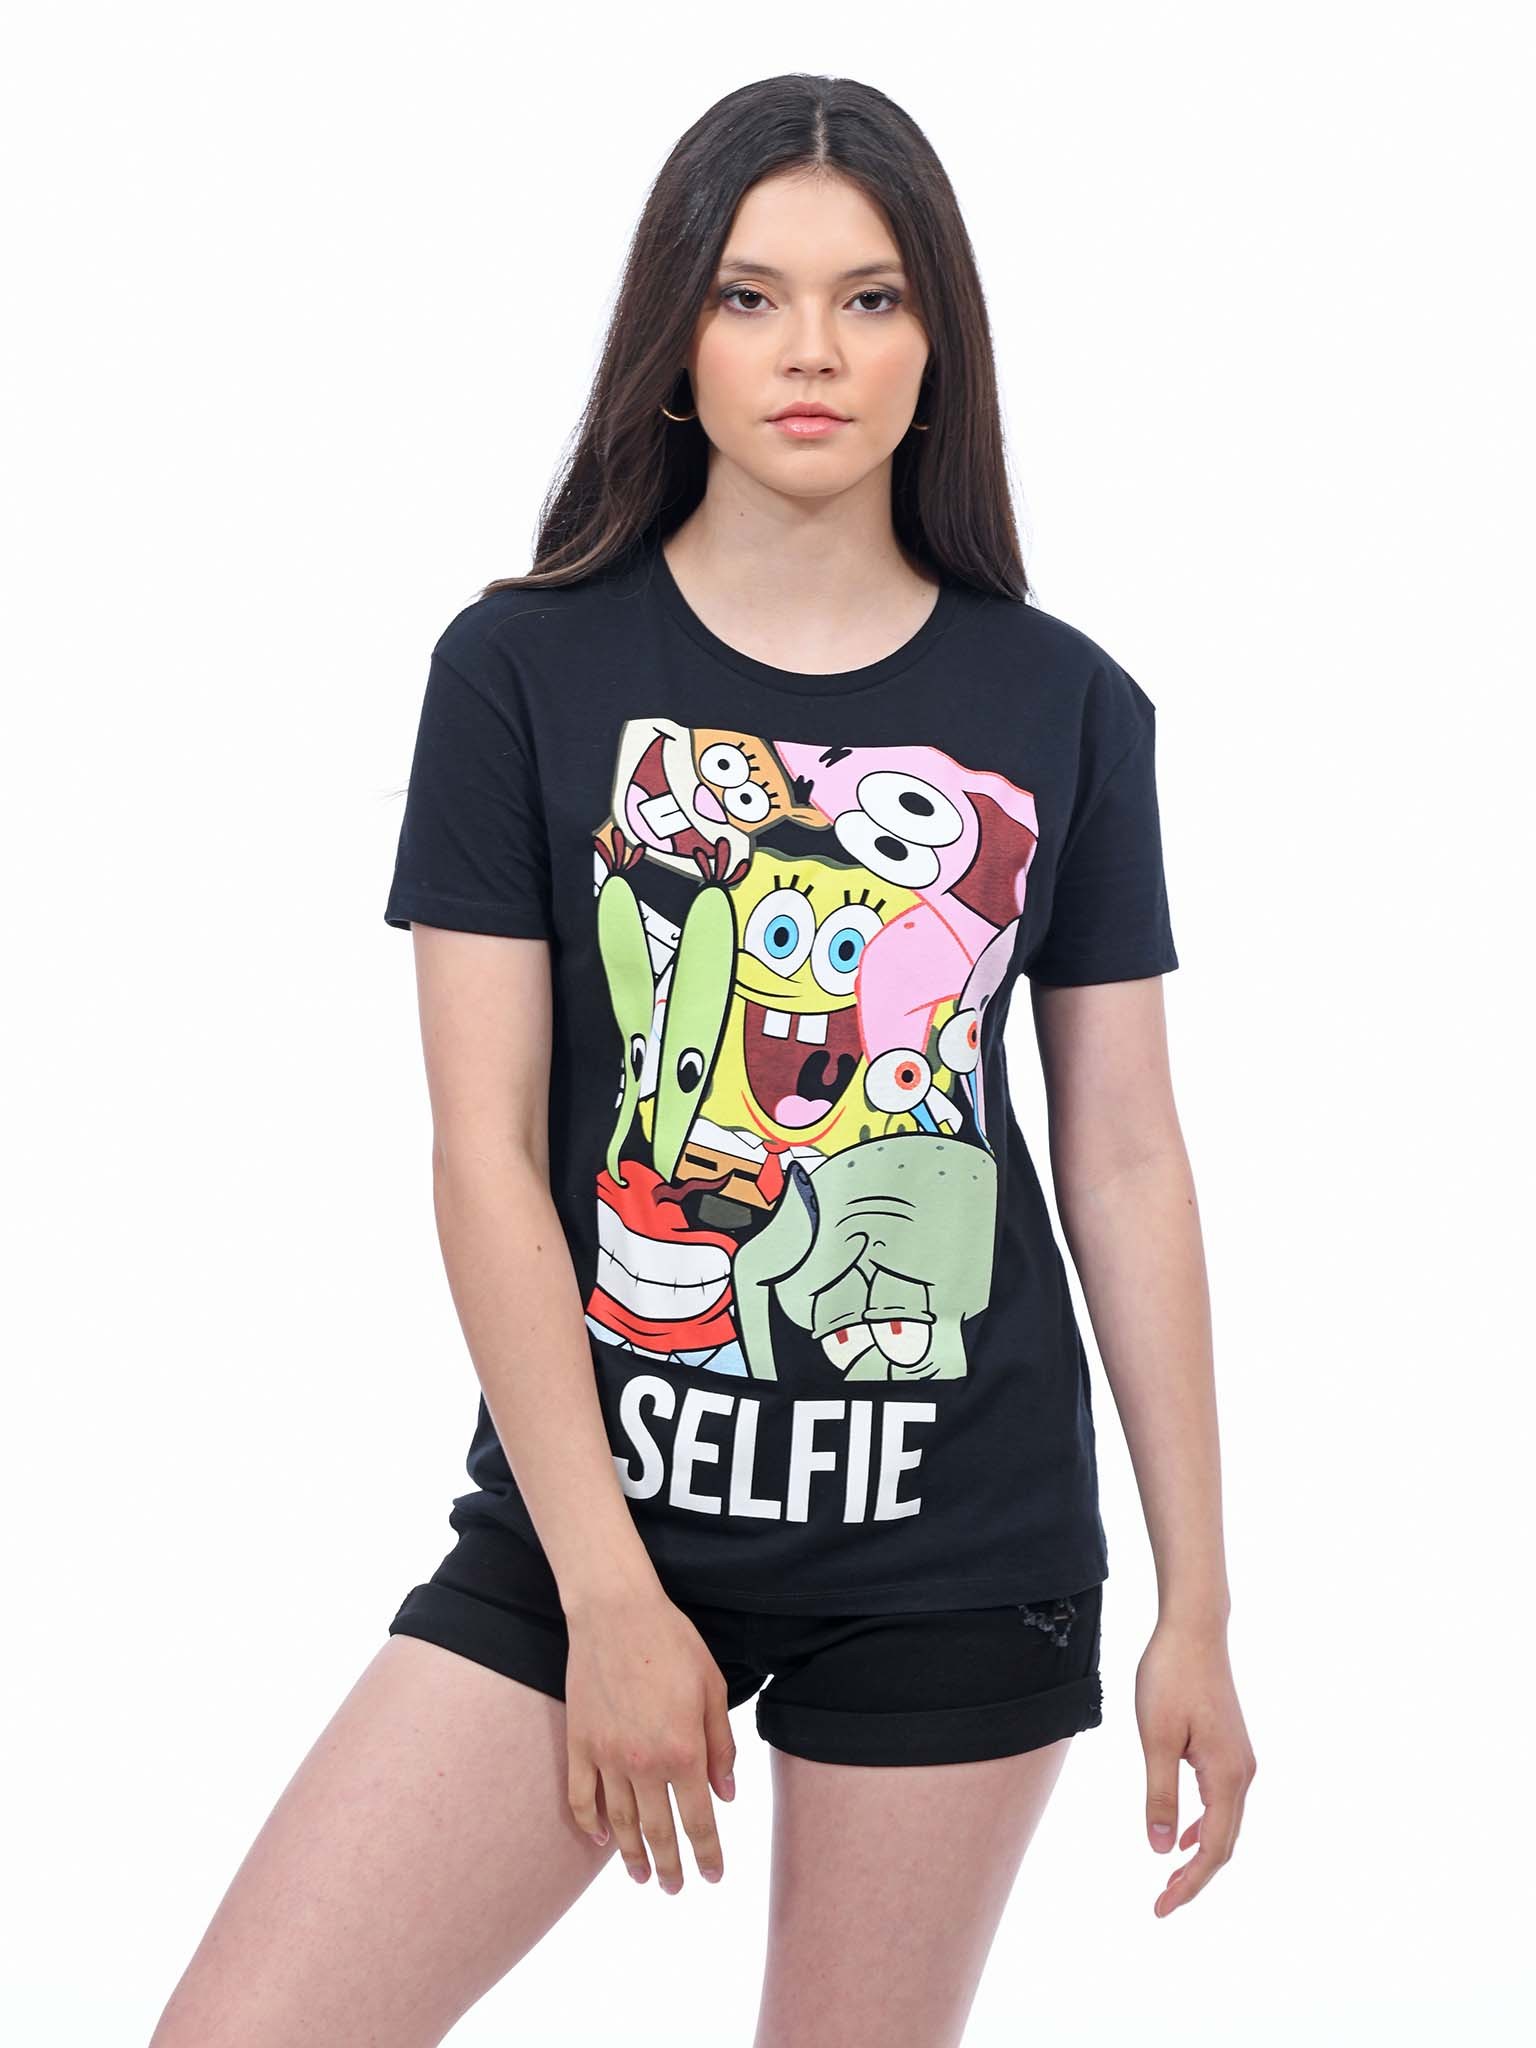 Gangster Spongebob With Some Friend Selfie Shirt Size Up To 5xl | Gangster Spongebob 2d Shirt